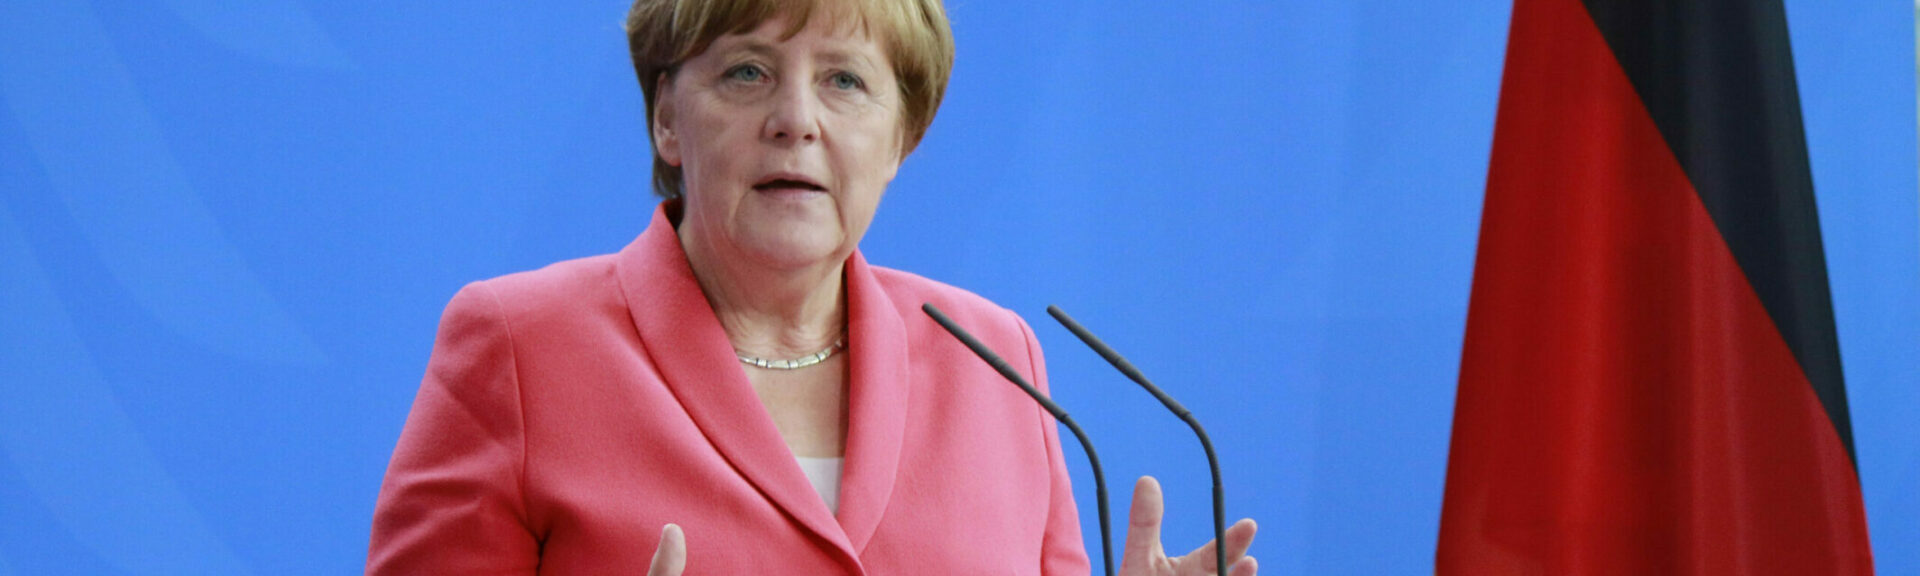 Angela Merkel conference